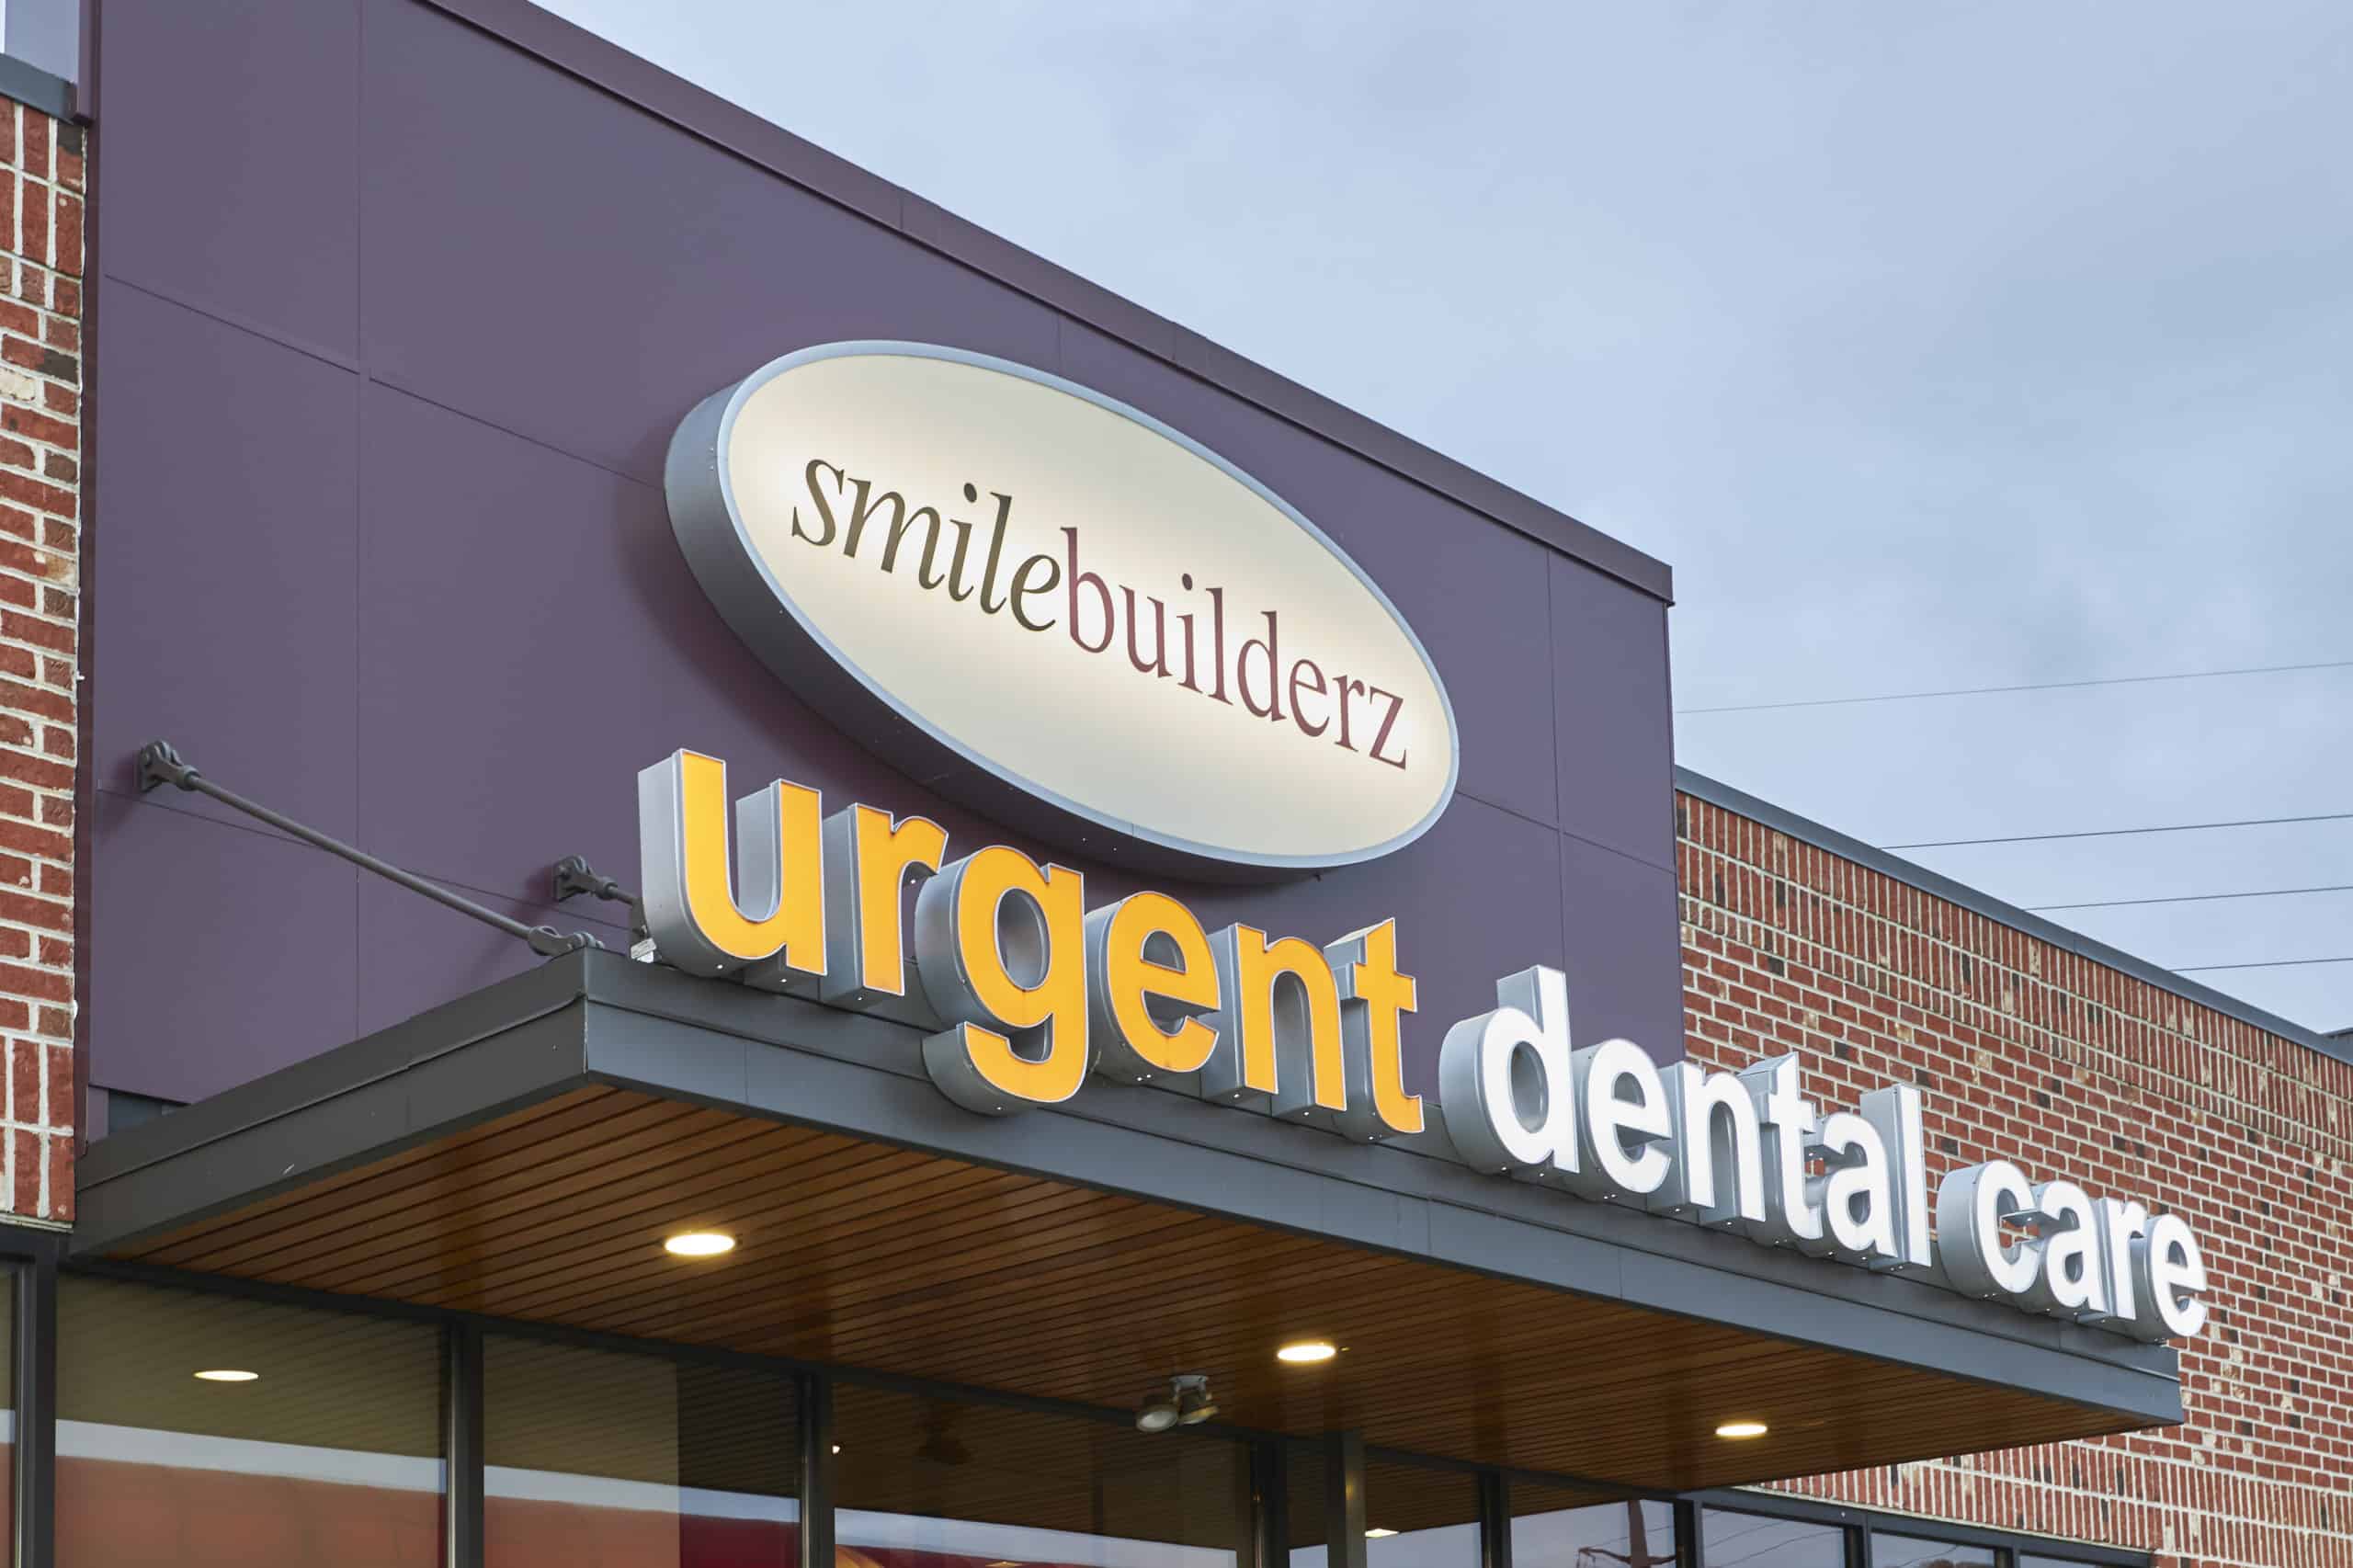 dental office - Lancaster & Ephrata - SmileBuilderz